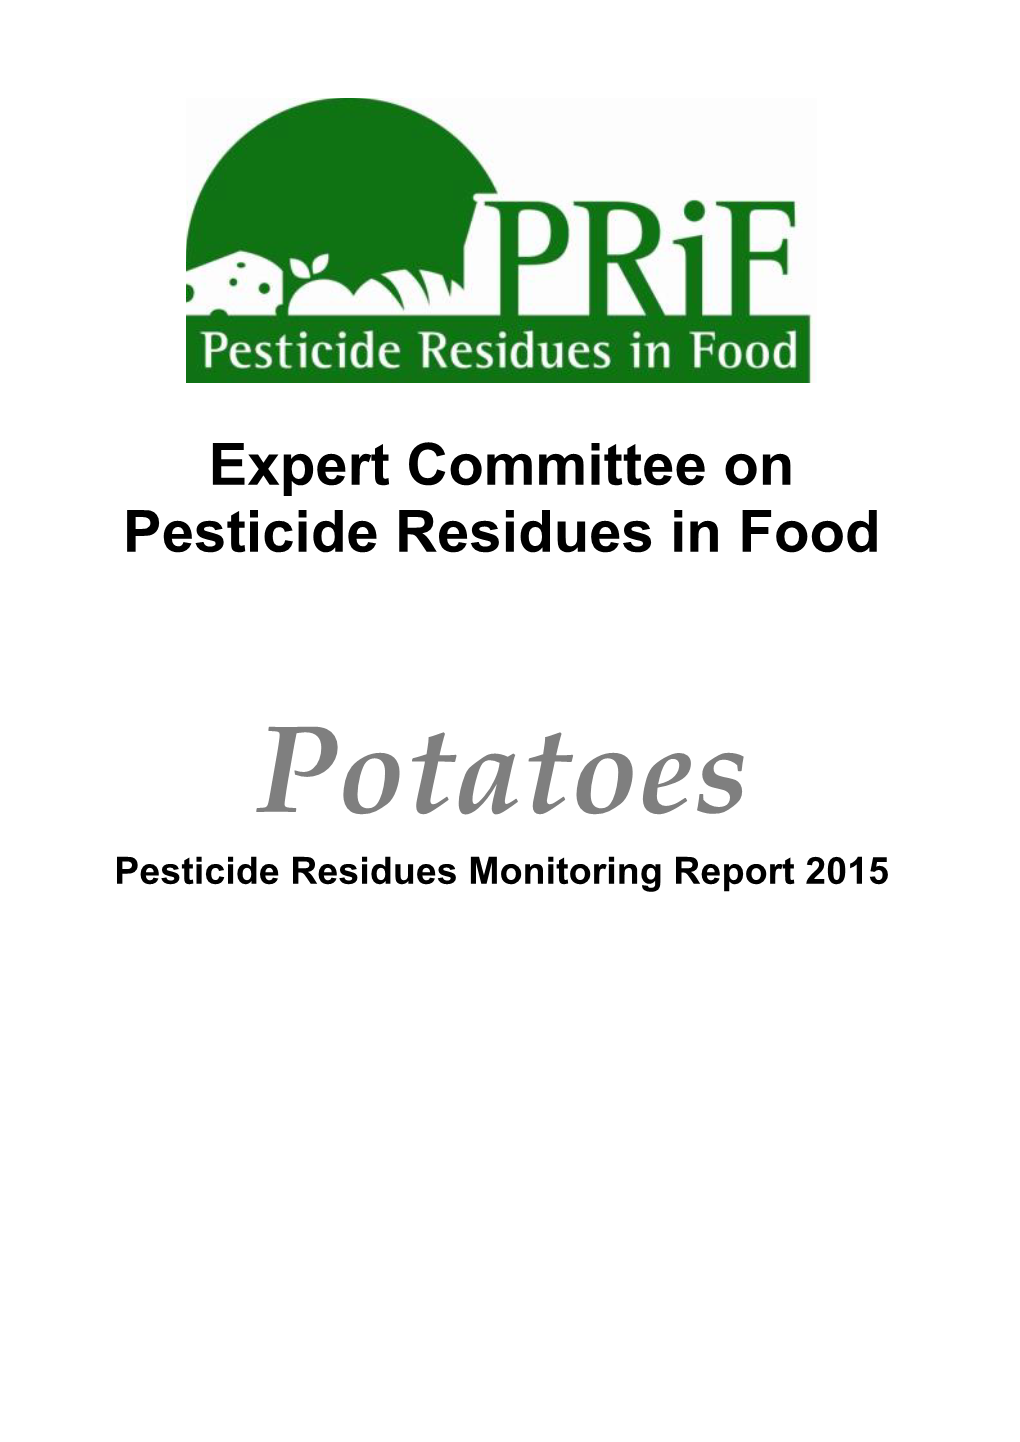 Potatoes Pesticide Residues Monitoring Report 2015